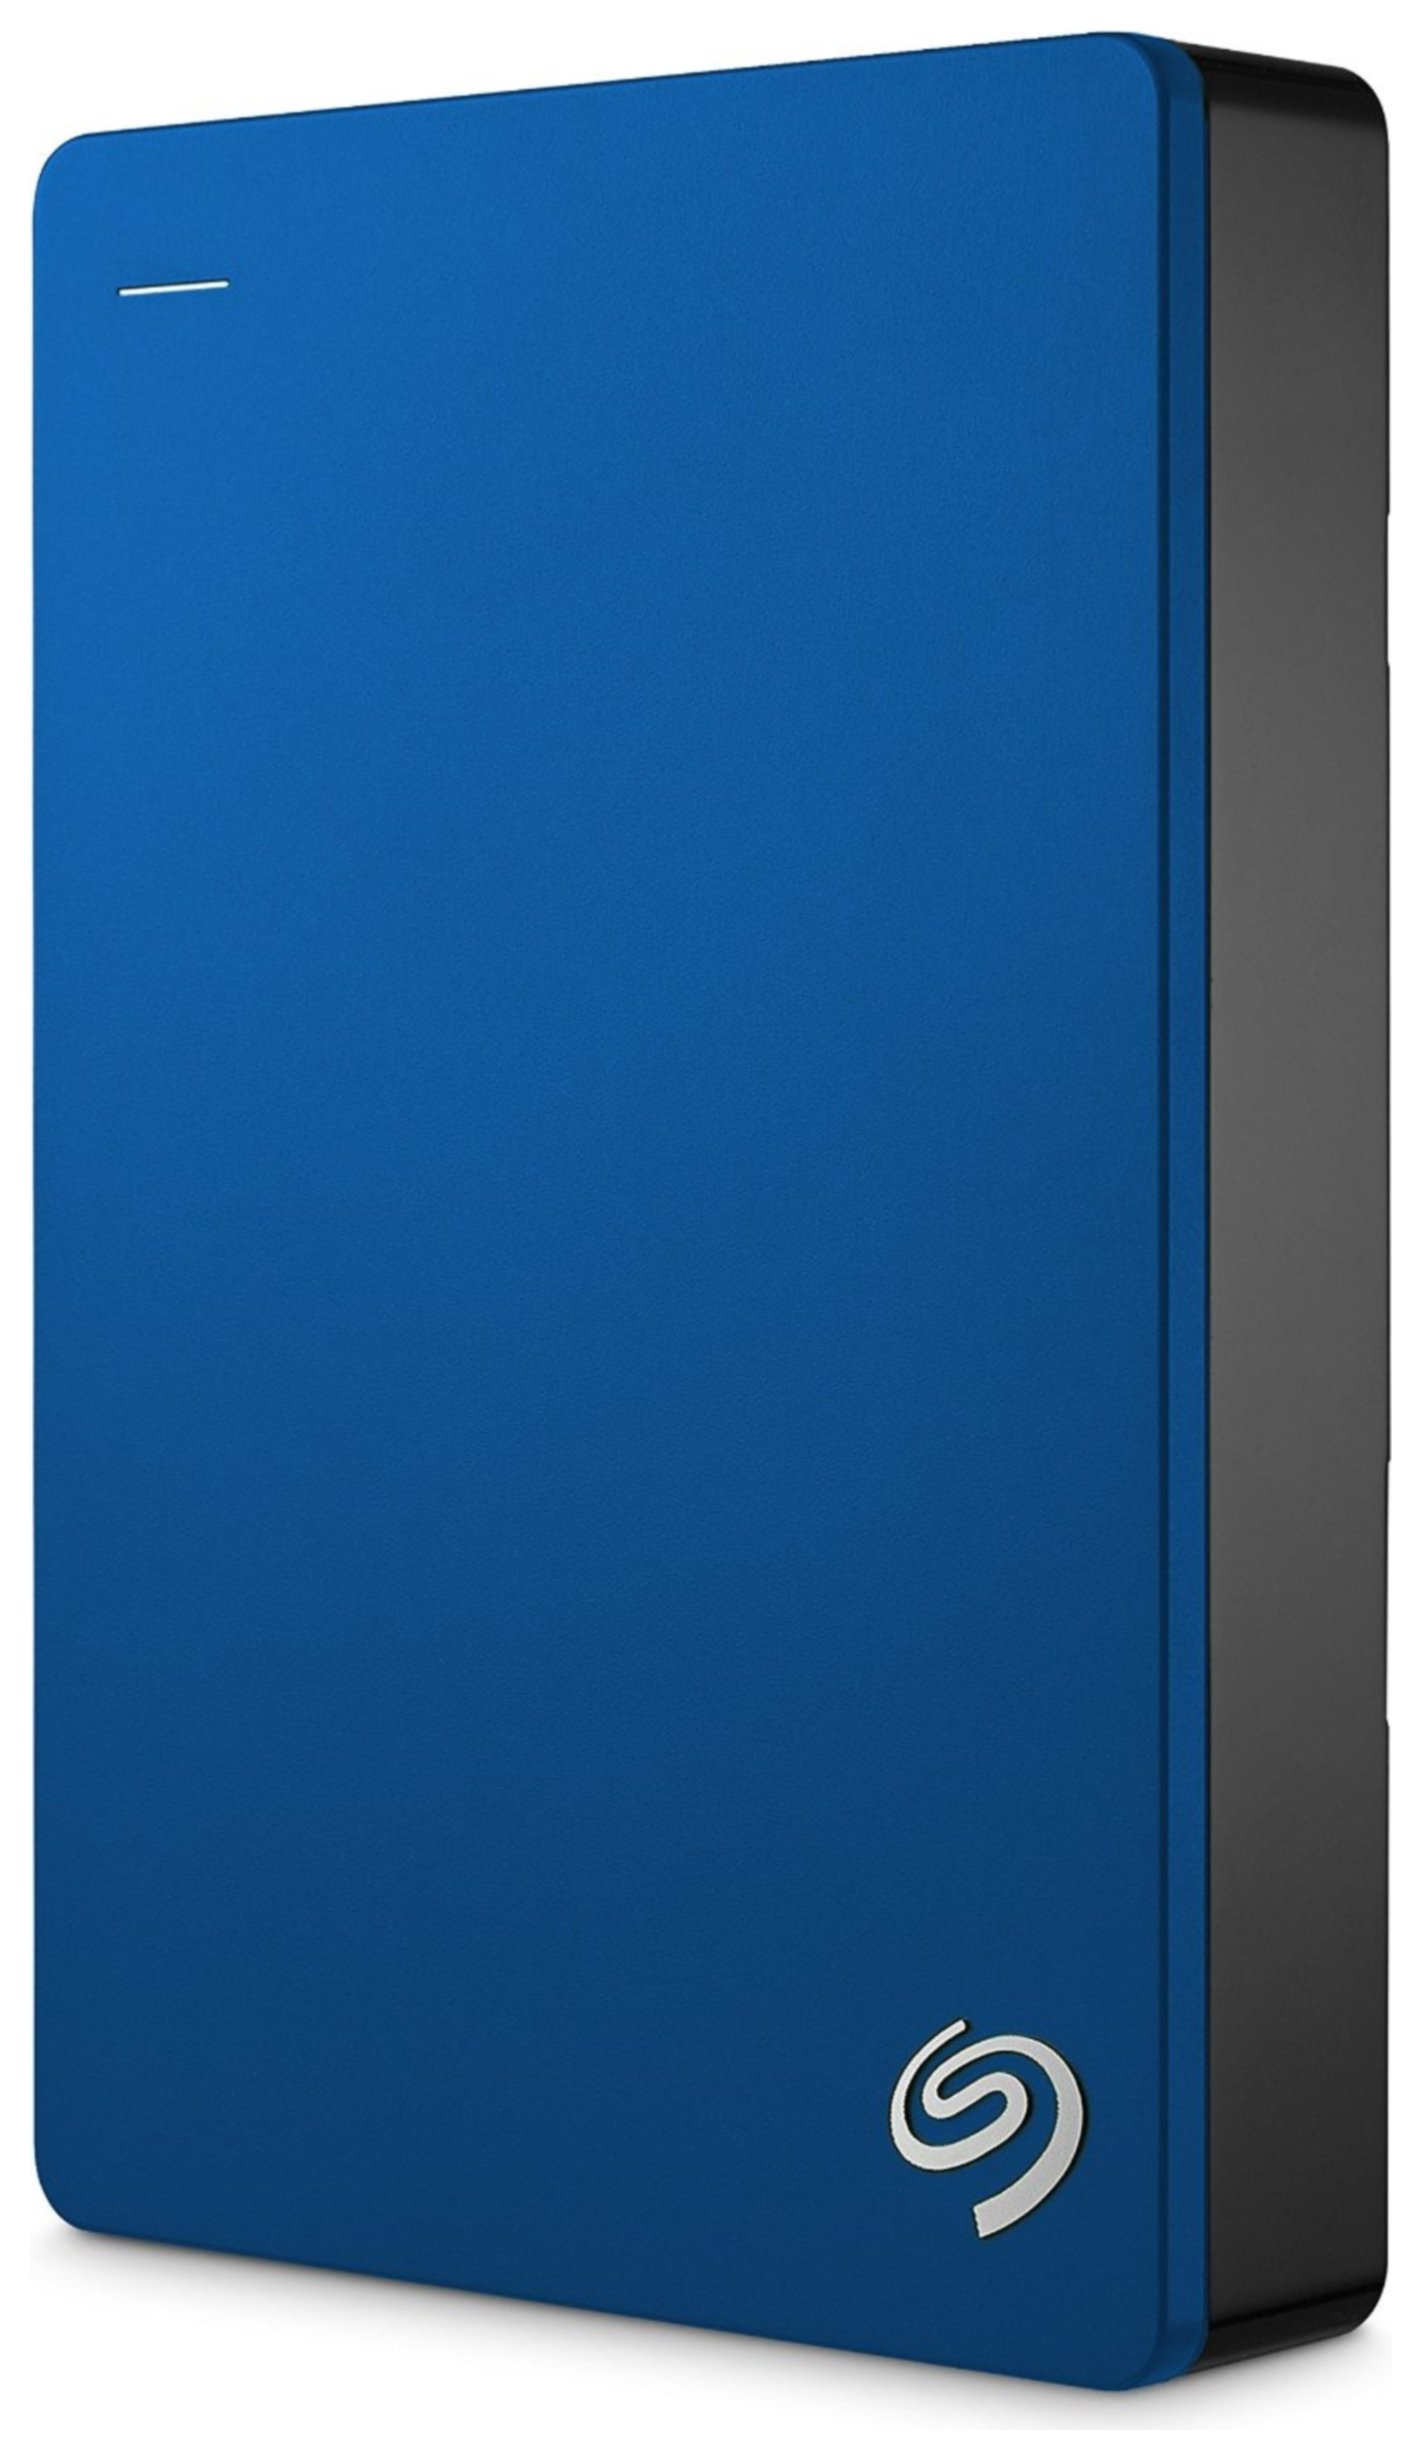 Seagate Backup Plus 4TB Portable Hard Drive - Blue